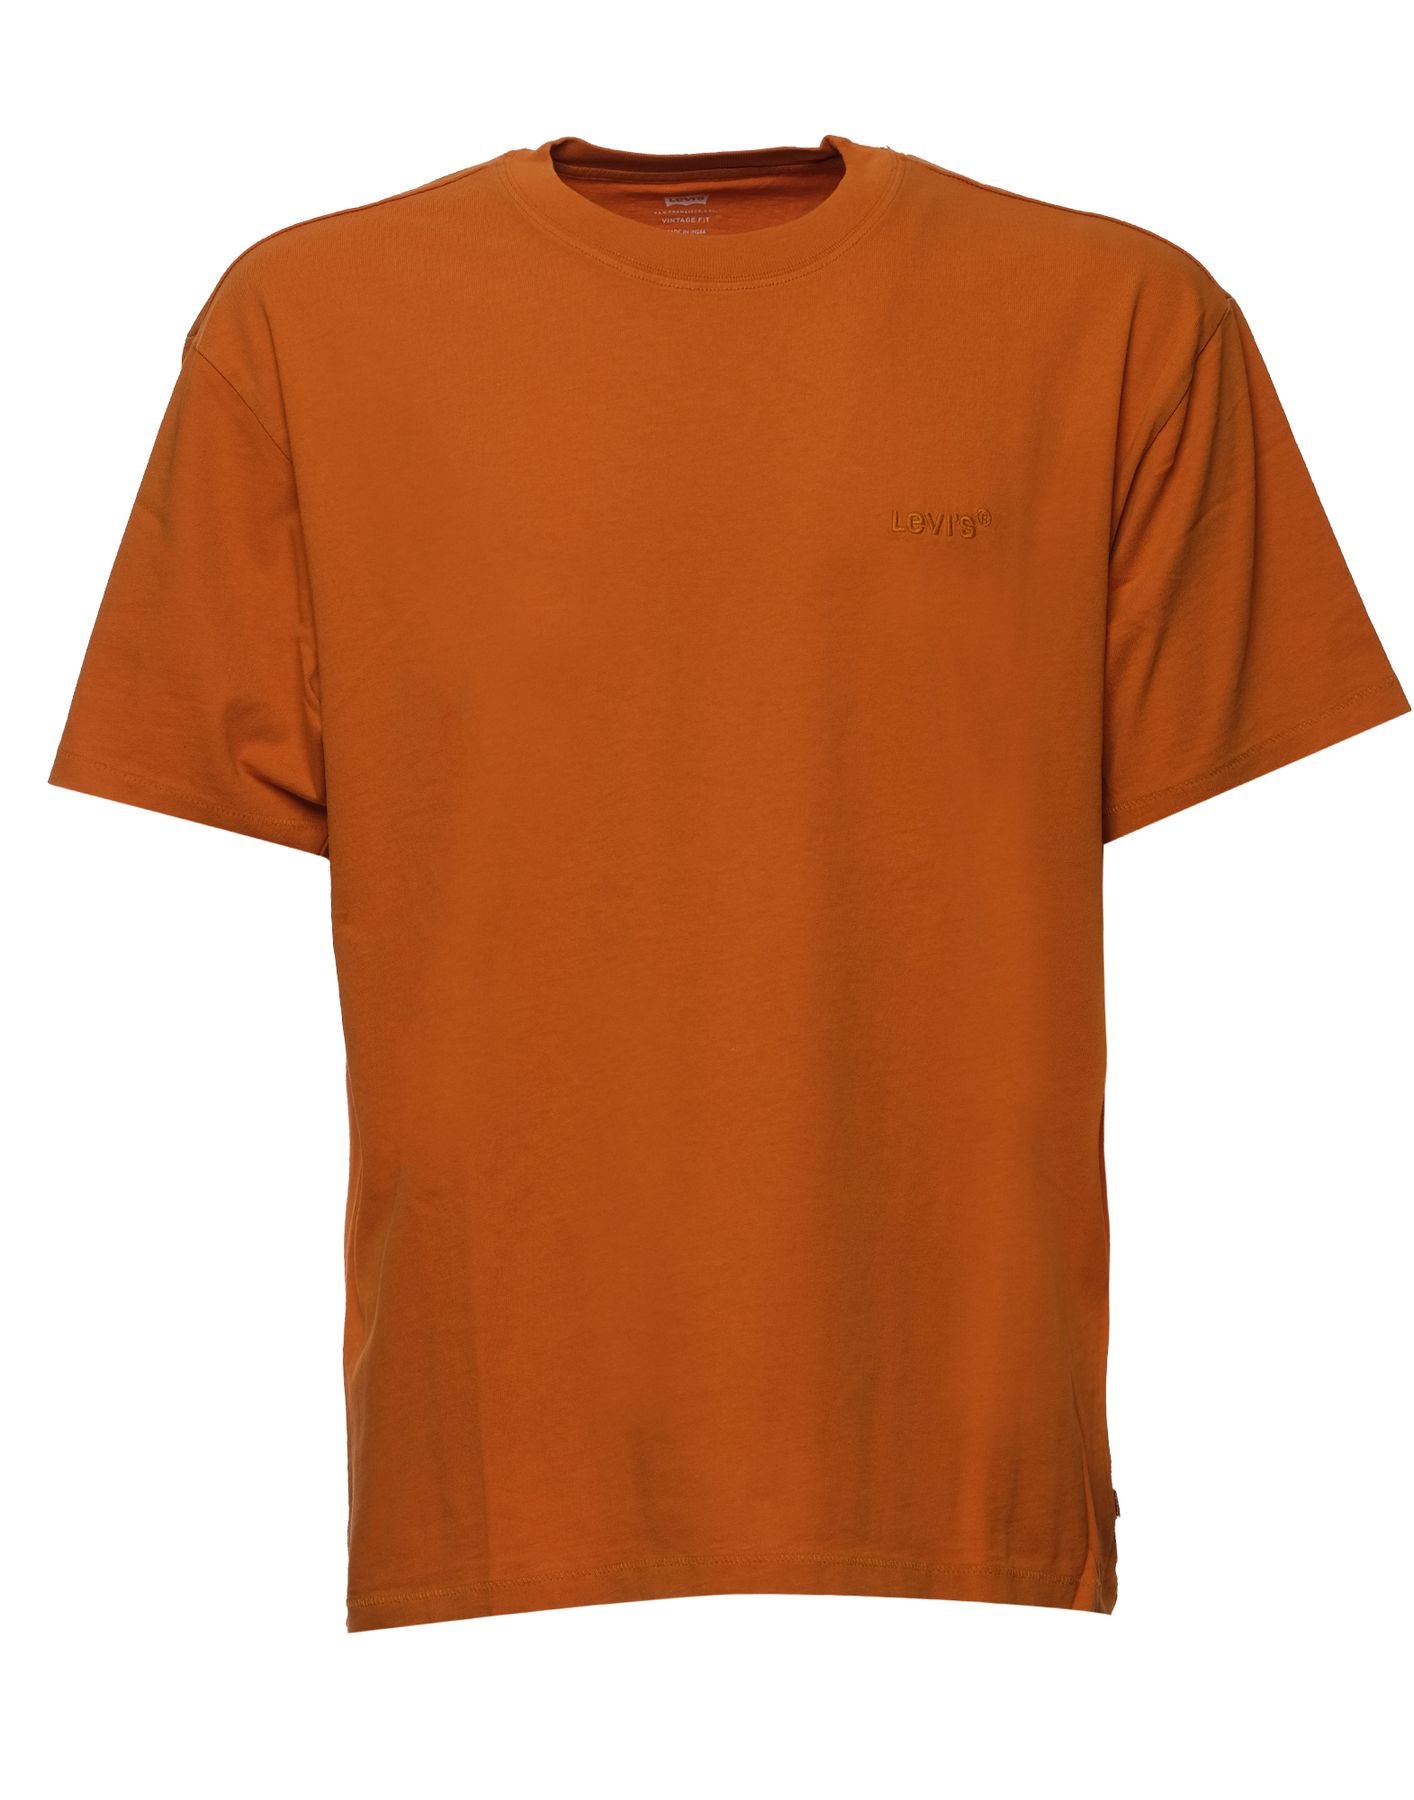 Camiseta hombre A0637 0070 DESERT SUN Levi's